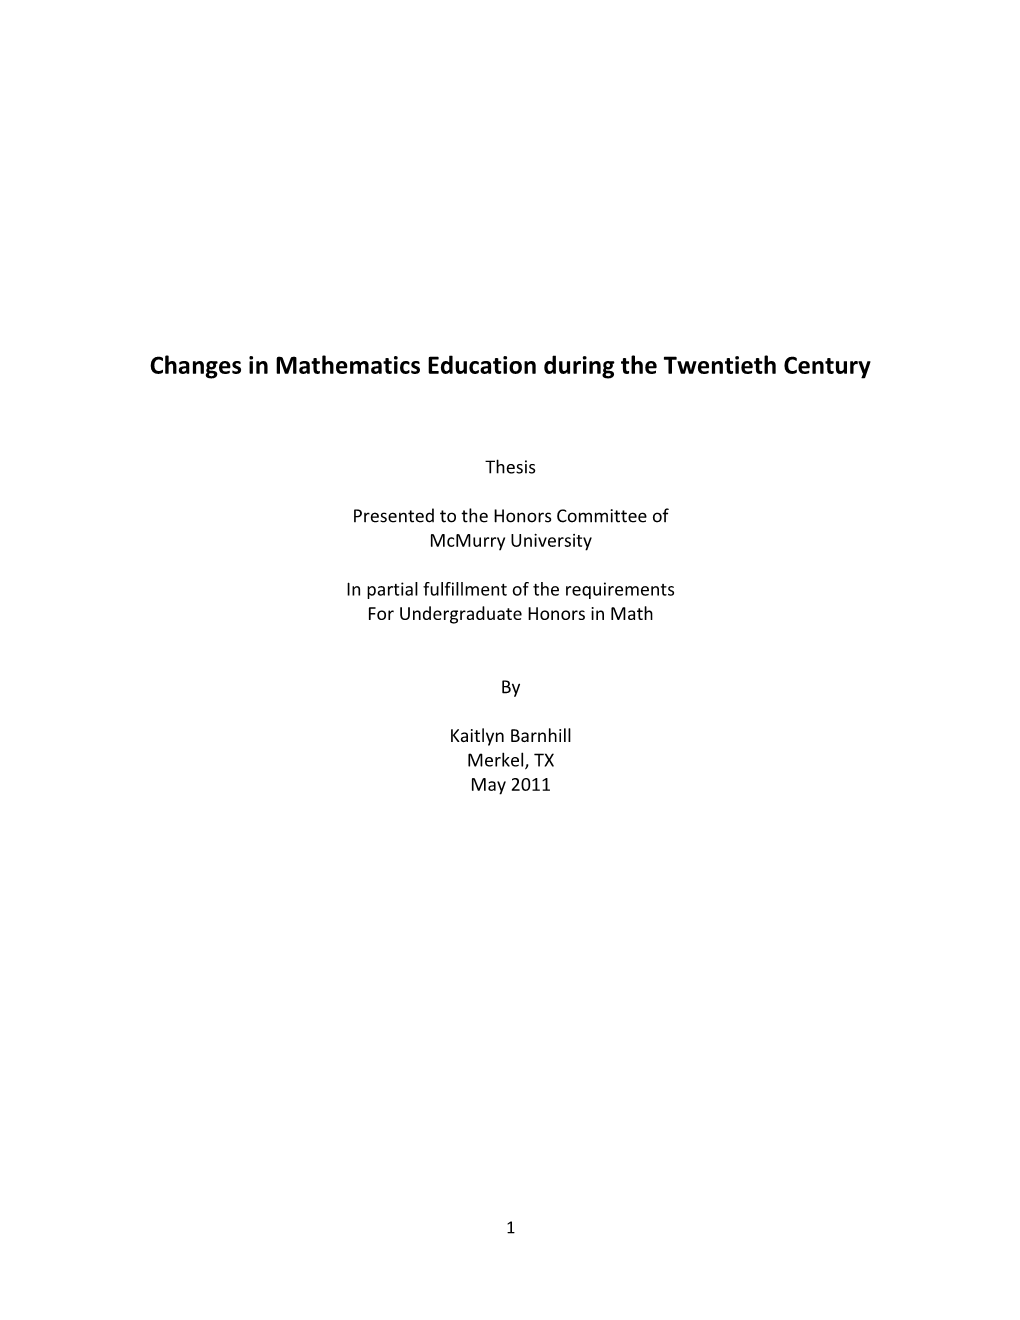 Changes in Mathematics Education During the Twentieth Century